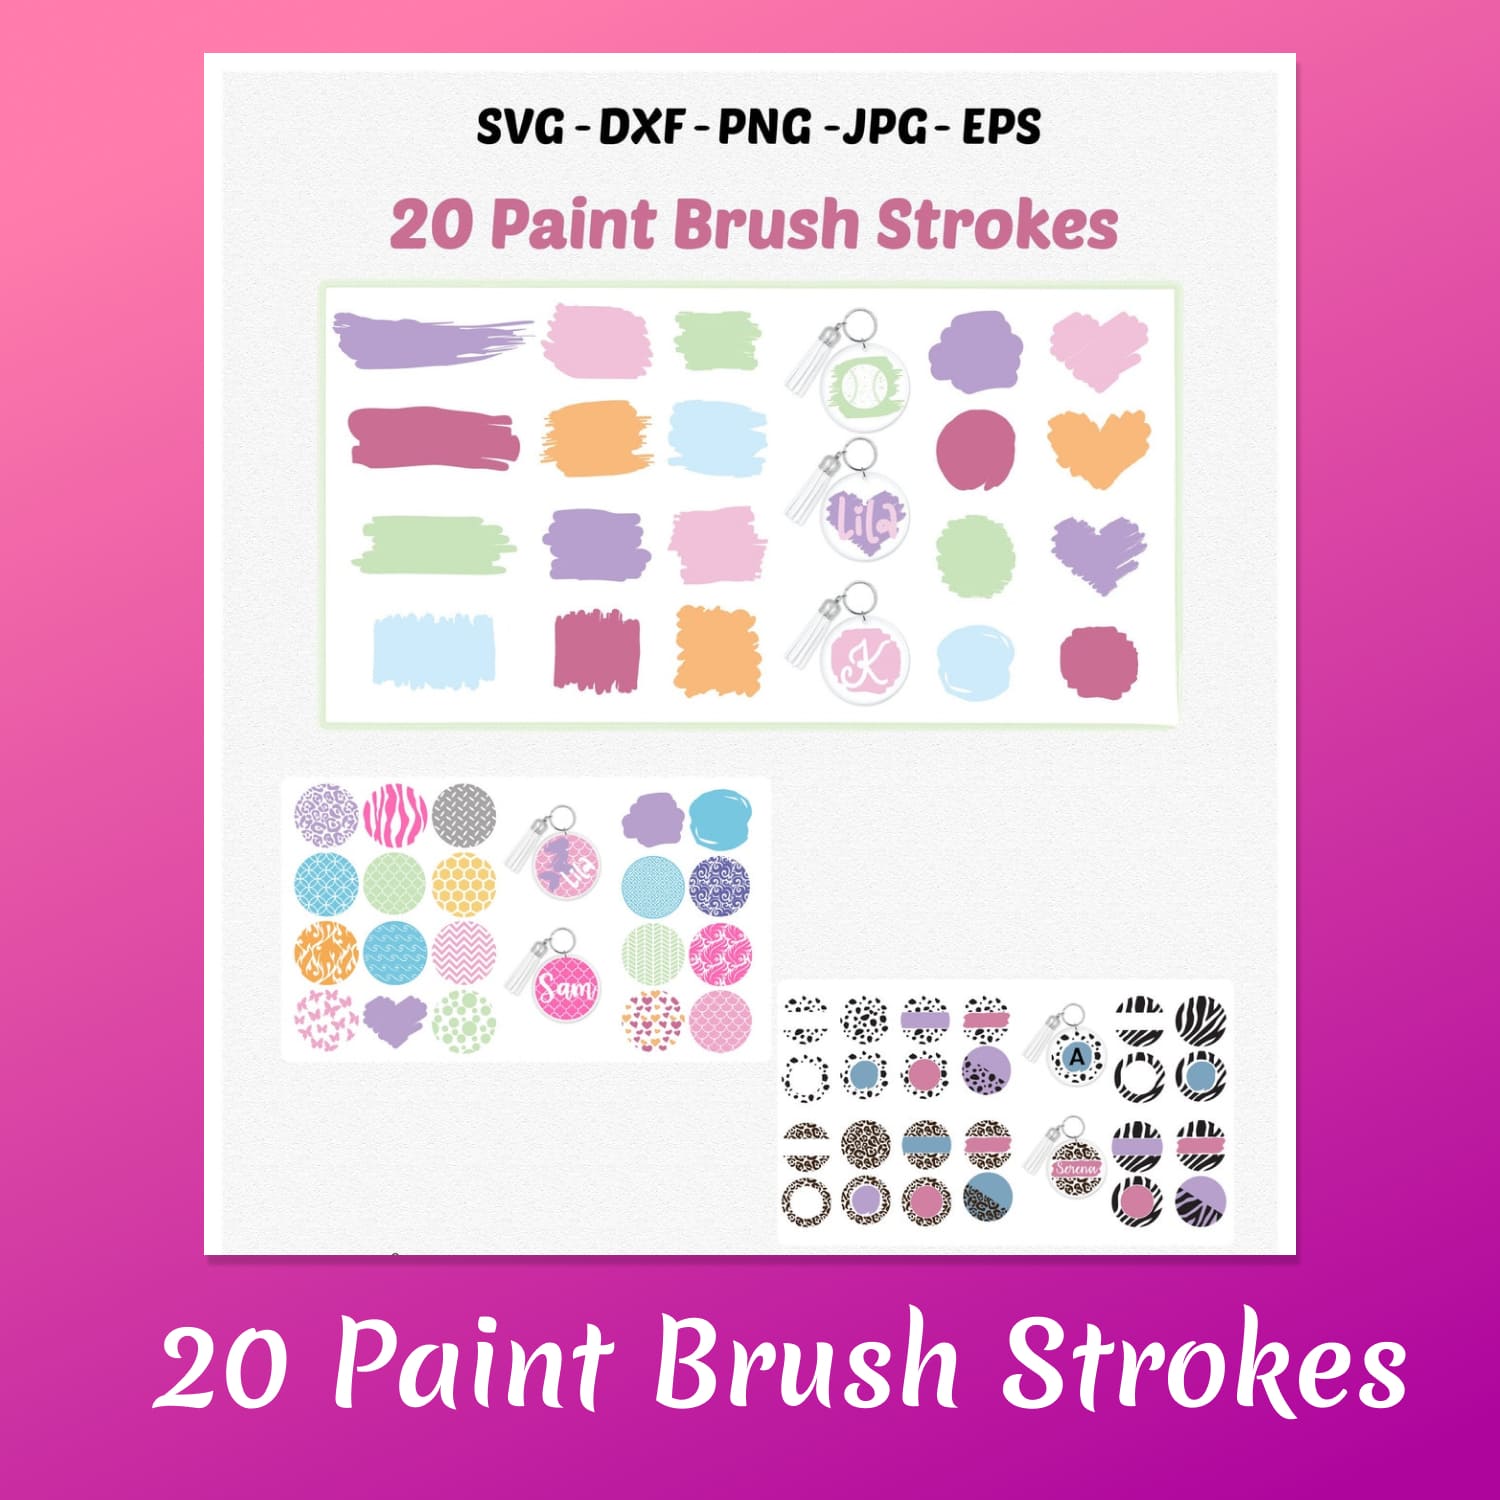 Paint Brush Strokes SVG main cover.